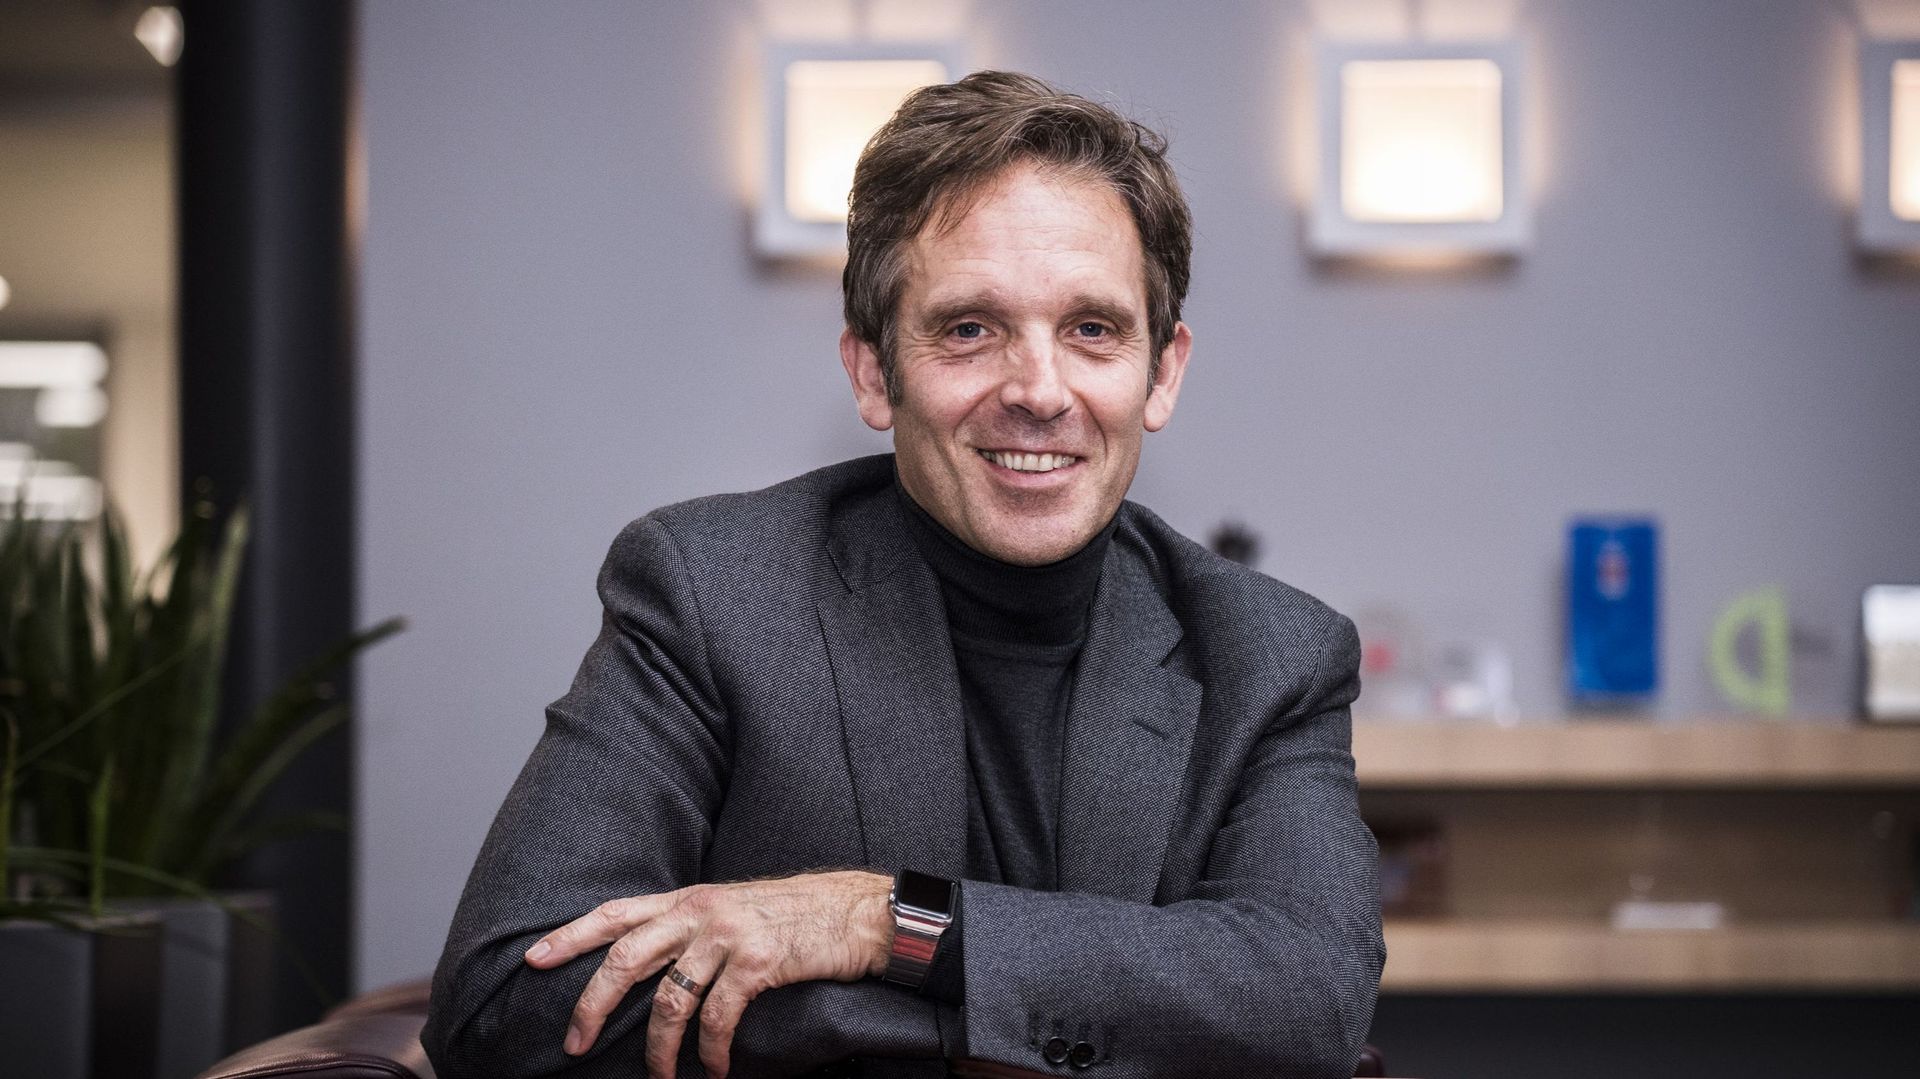 Salvatore Curaba, CEO de EASI, meilleur employeur de Belgique